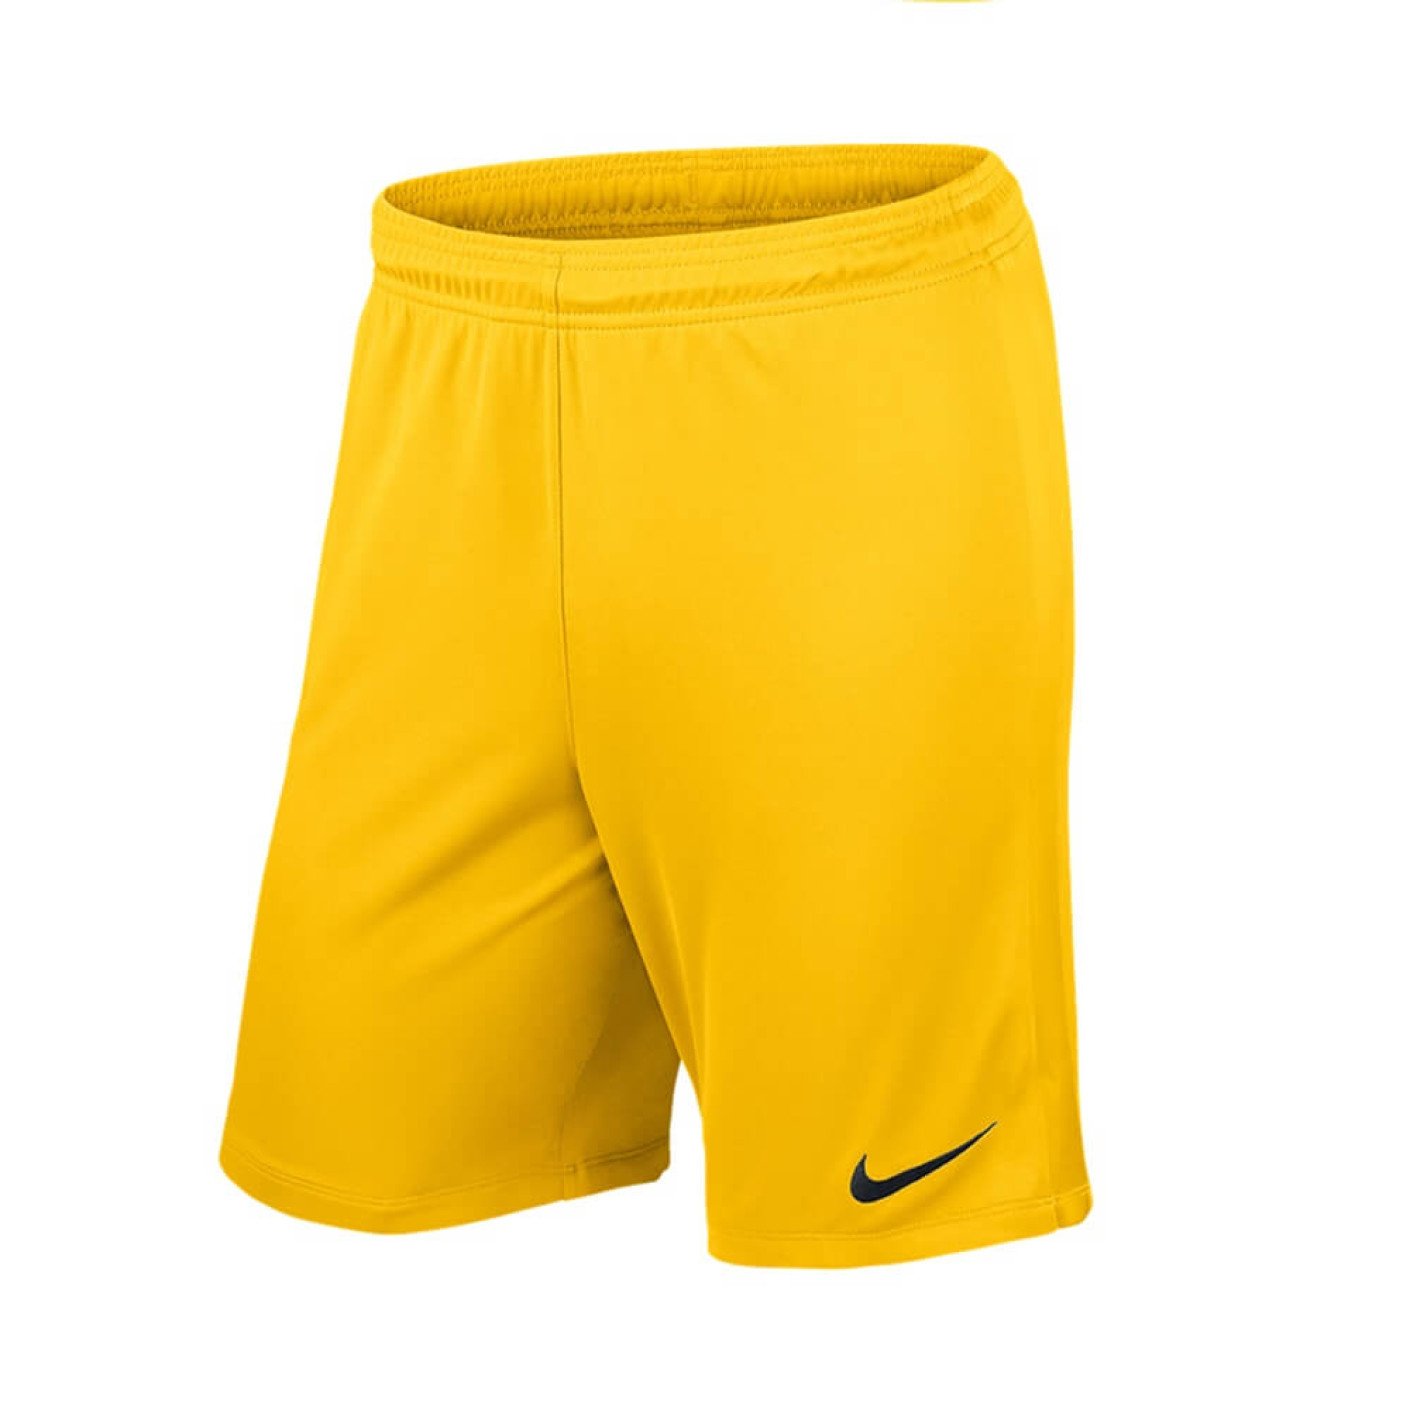 Nike Youth League Knit Voetbalbroekje Kids Tour Yellow